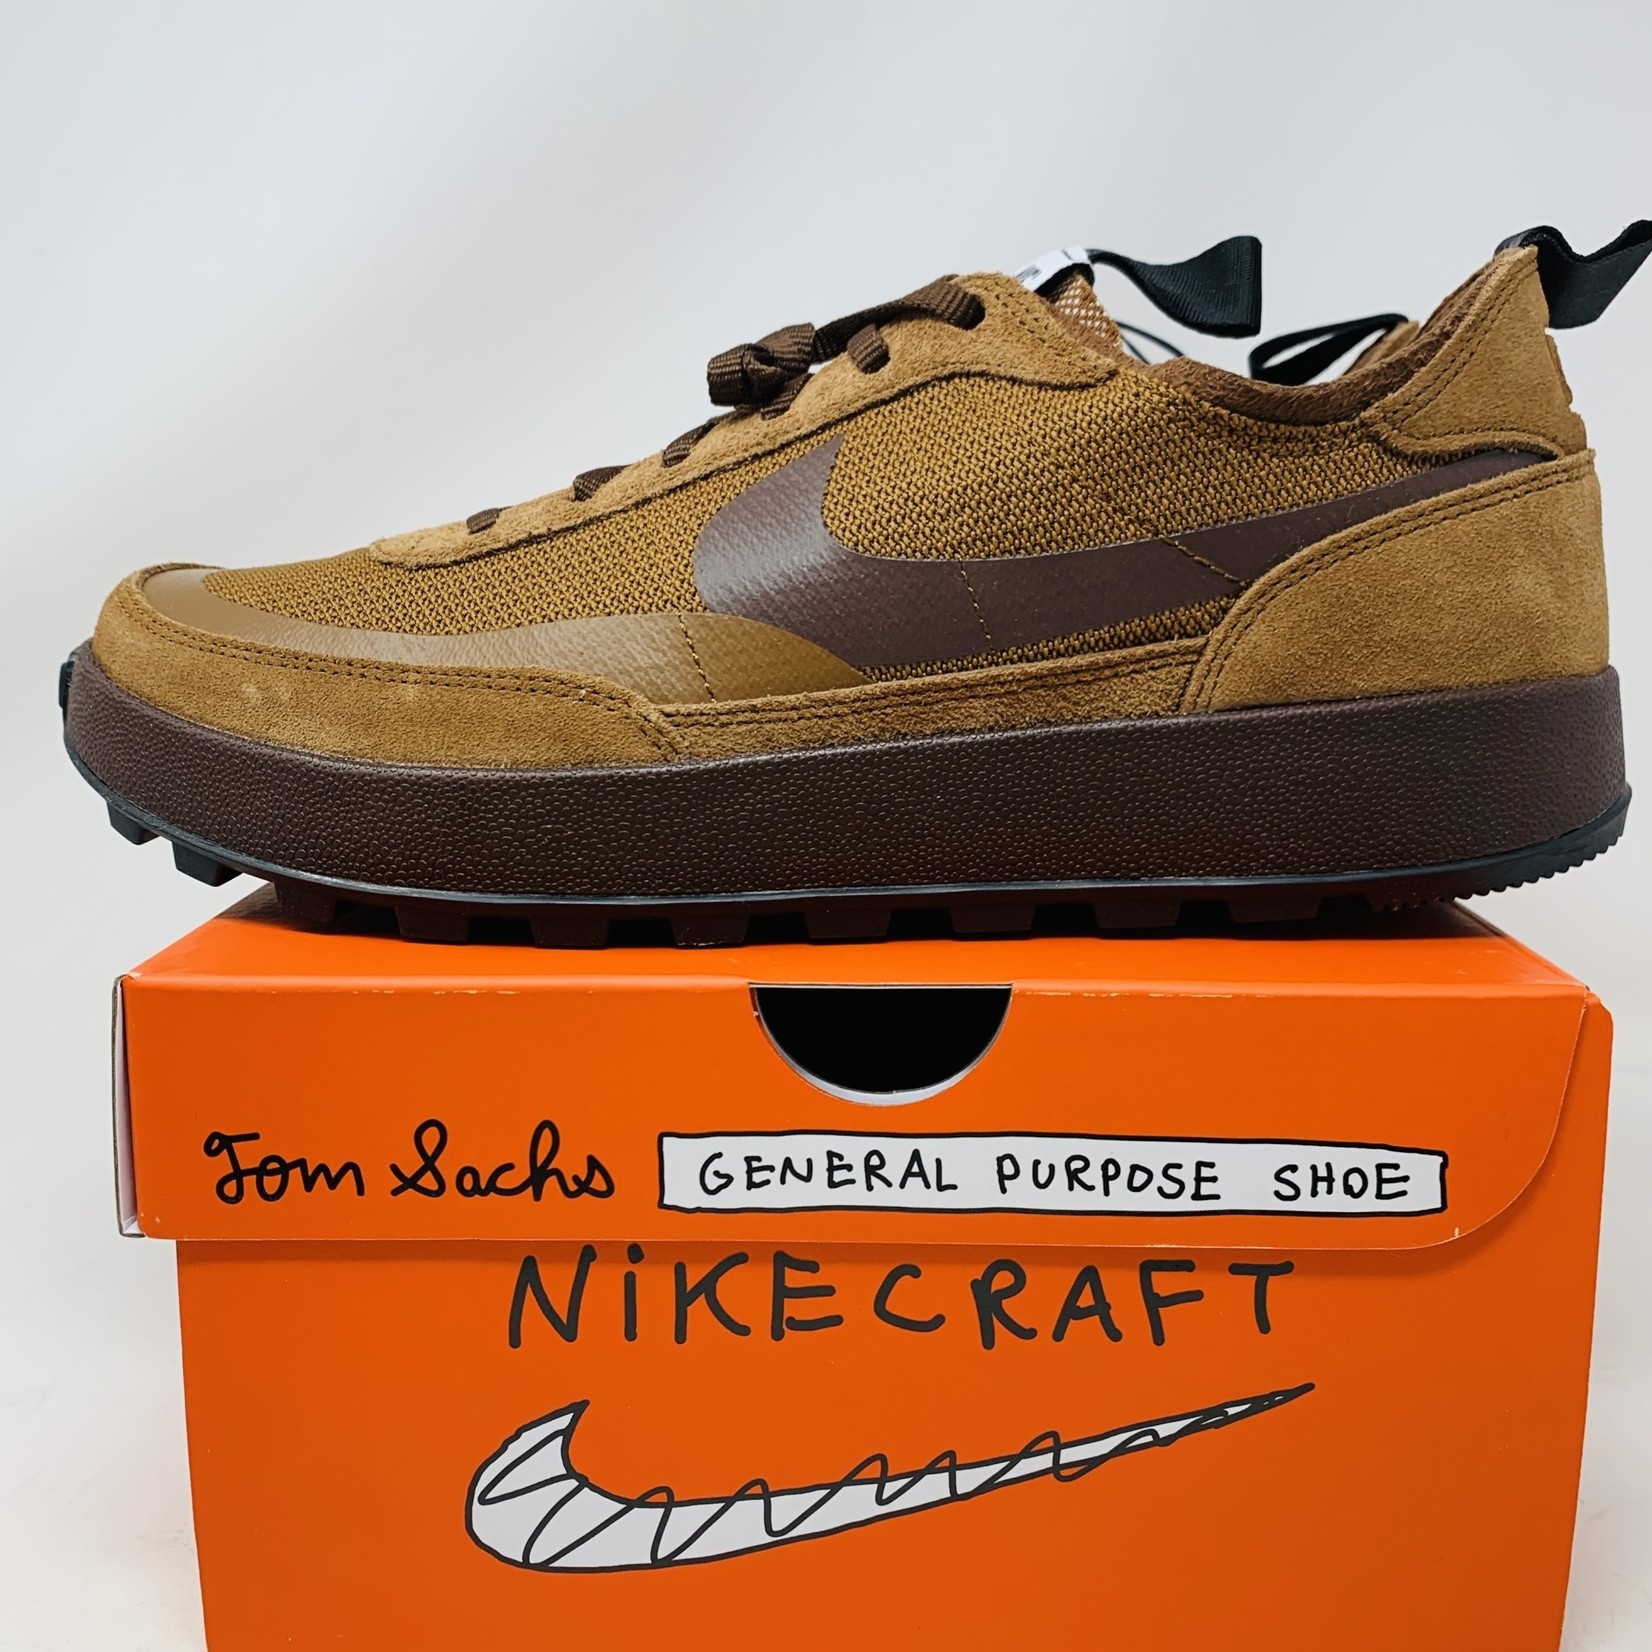 Nike Craft General Purpose Tom Sachs Field Brown